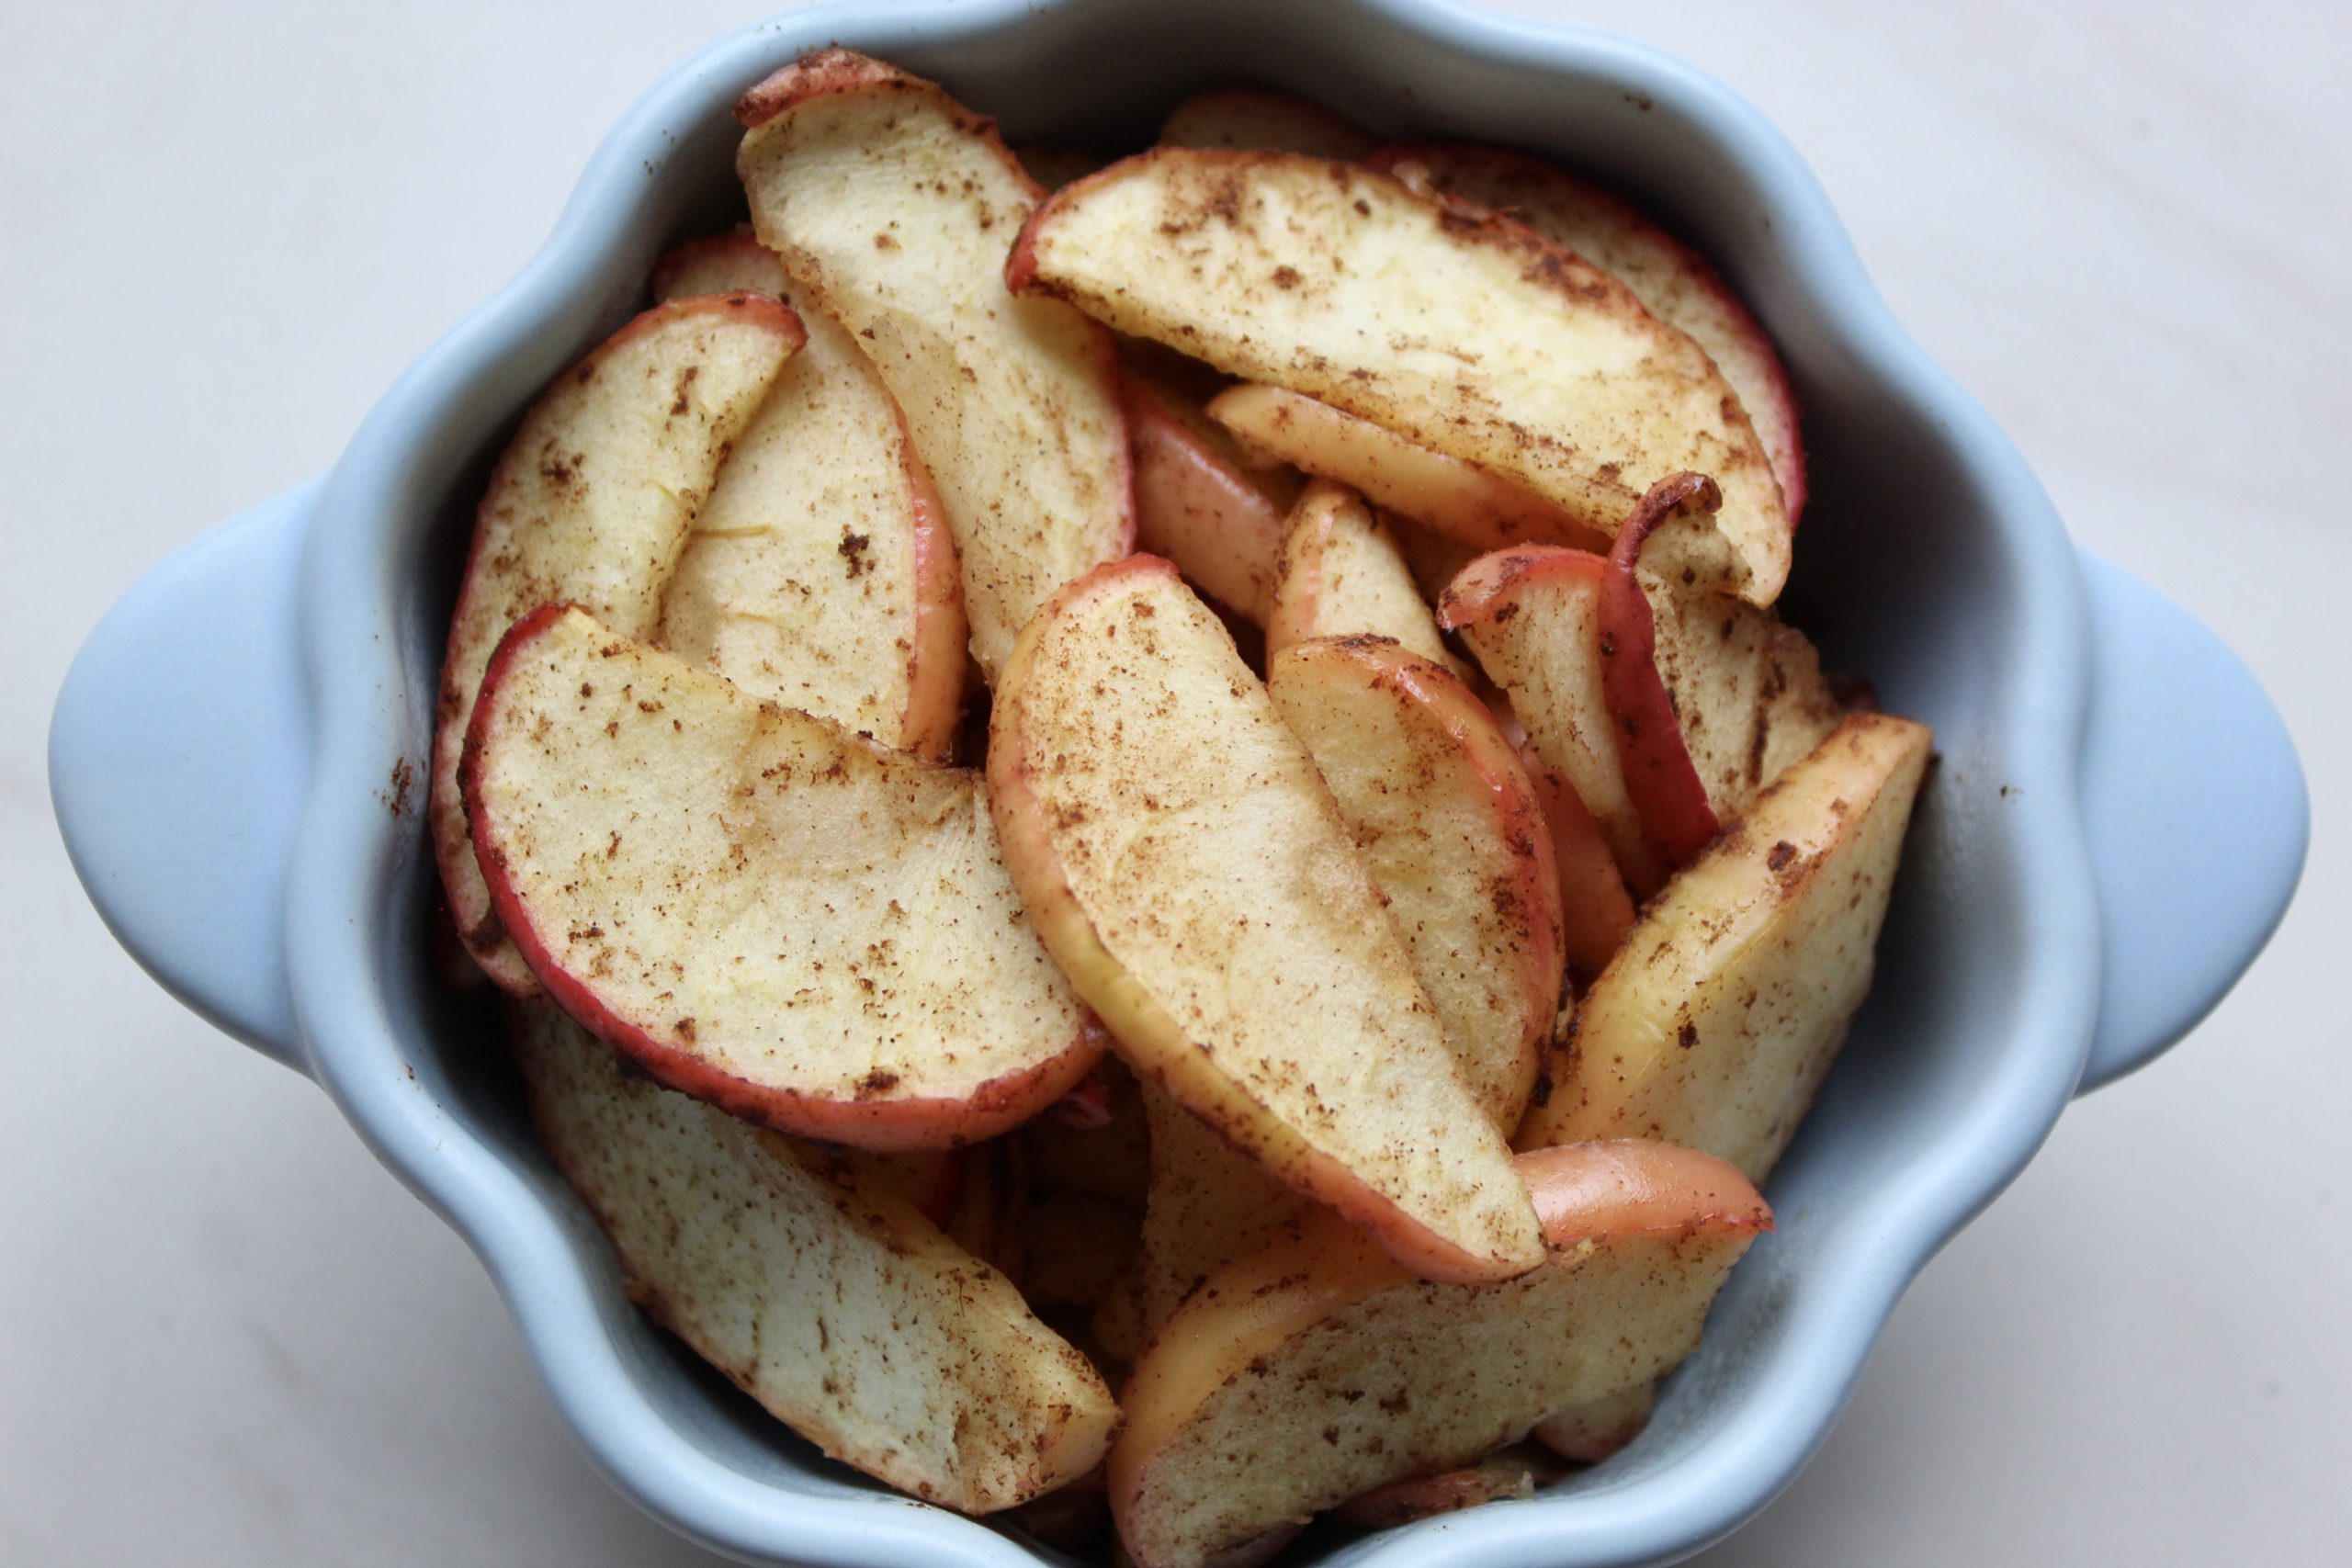 Cinnamon Sugar Baked Apple Slices - Home. Made. Interest.